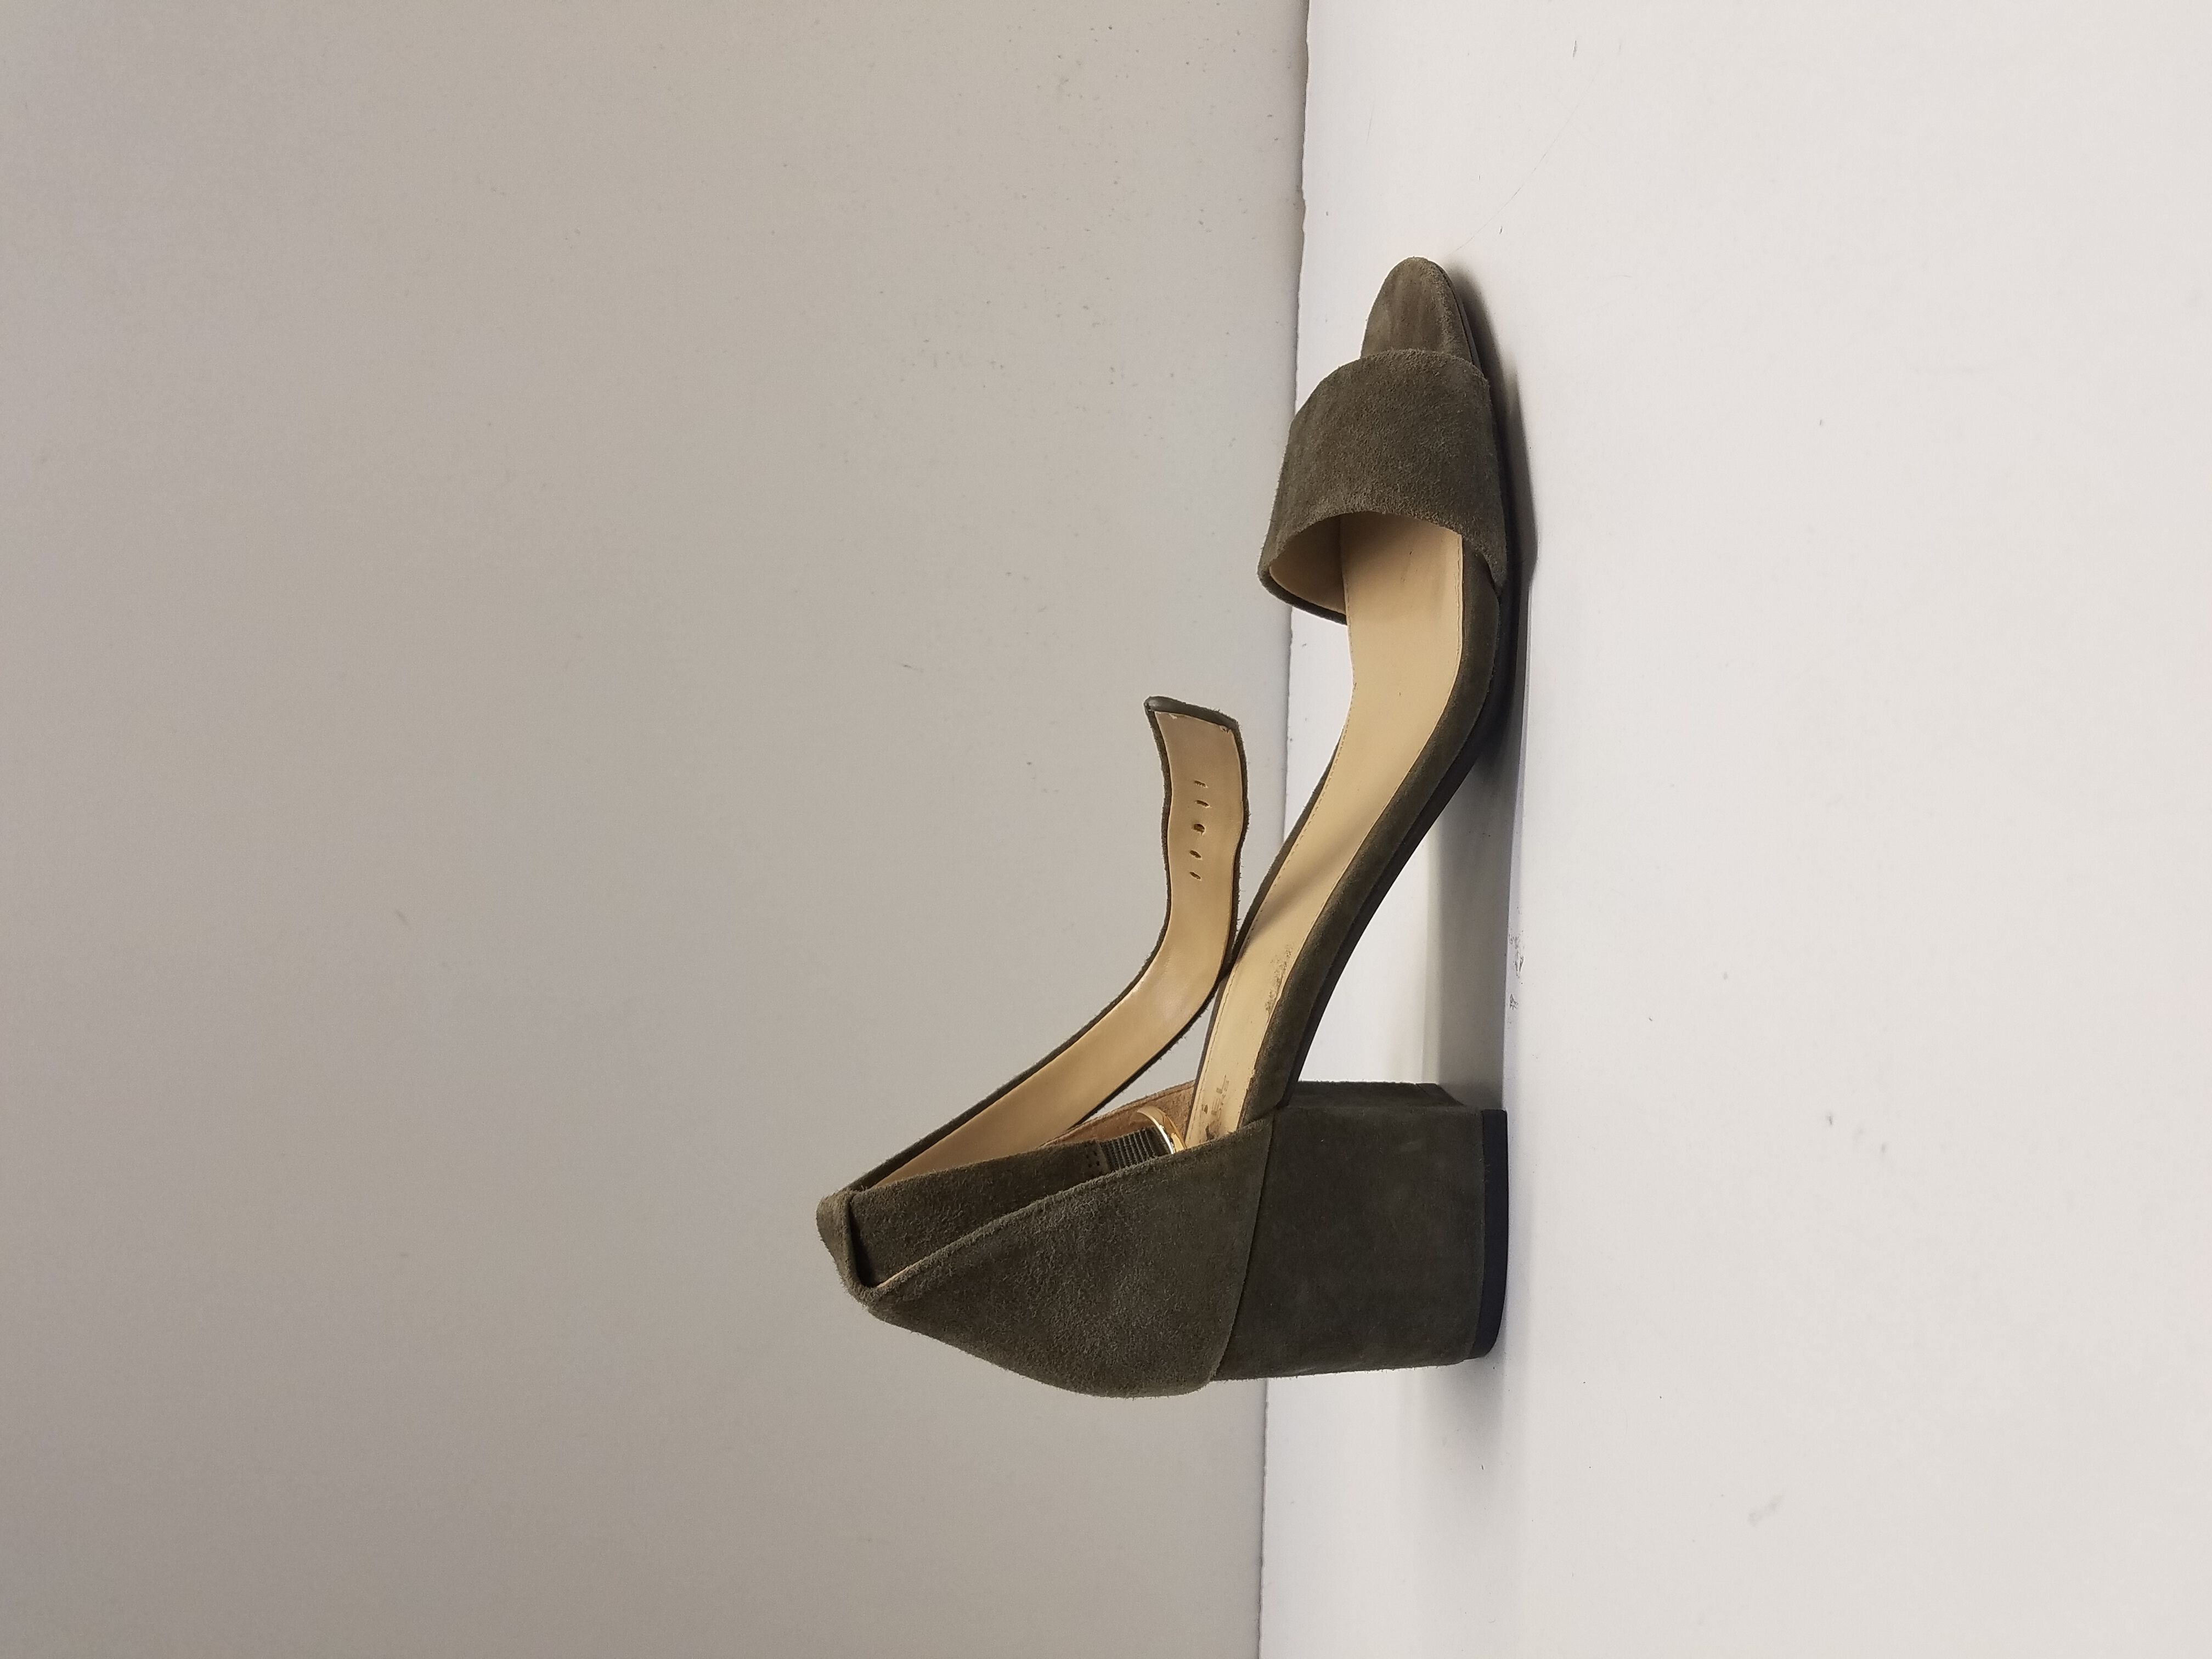 Veowalk Olive Green Women Plain Patent Leather Pointed Toe Stiletto Pumps  8cm 10cm 12cm High Heel Elegant Party Wedding Shoes